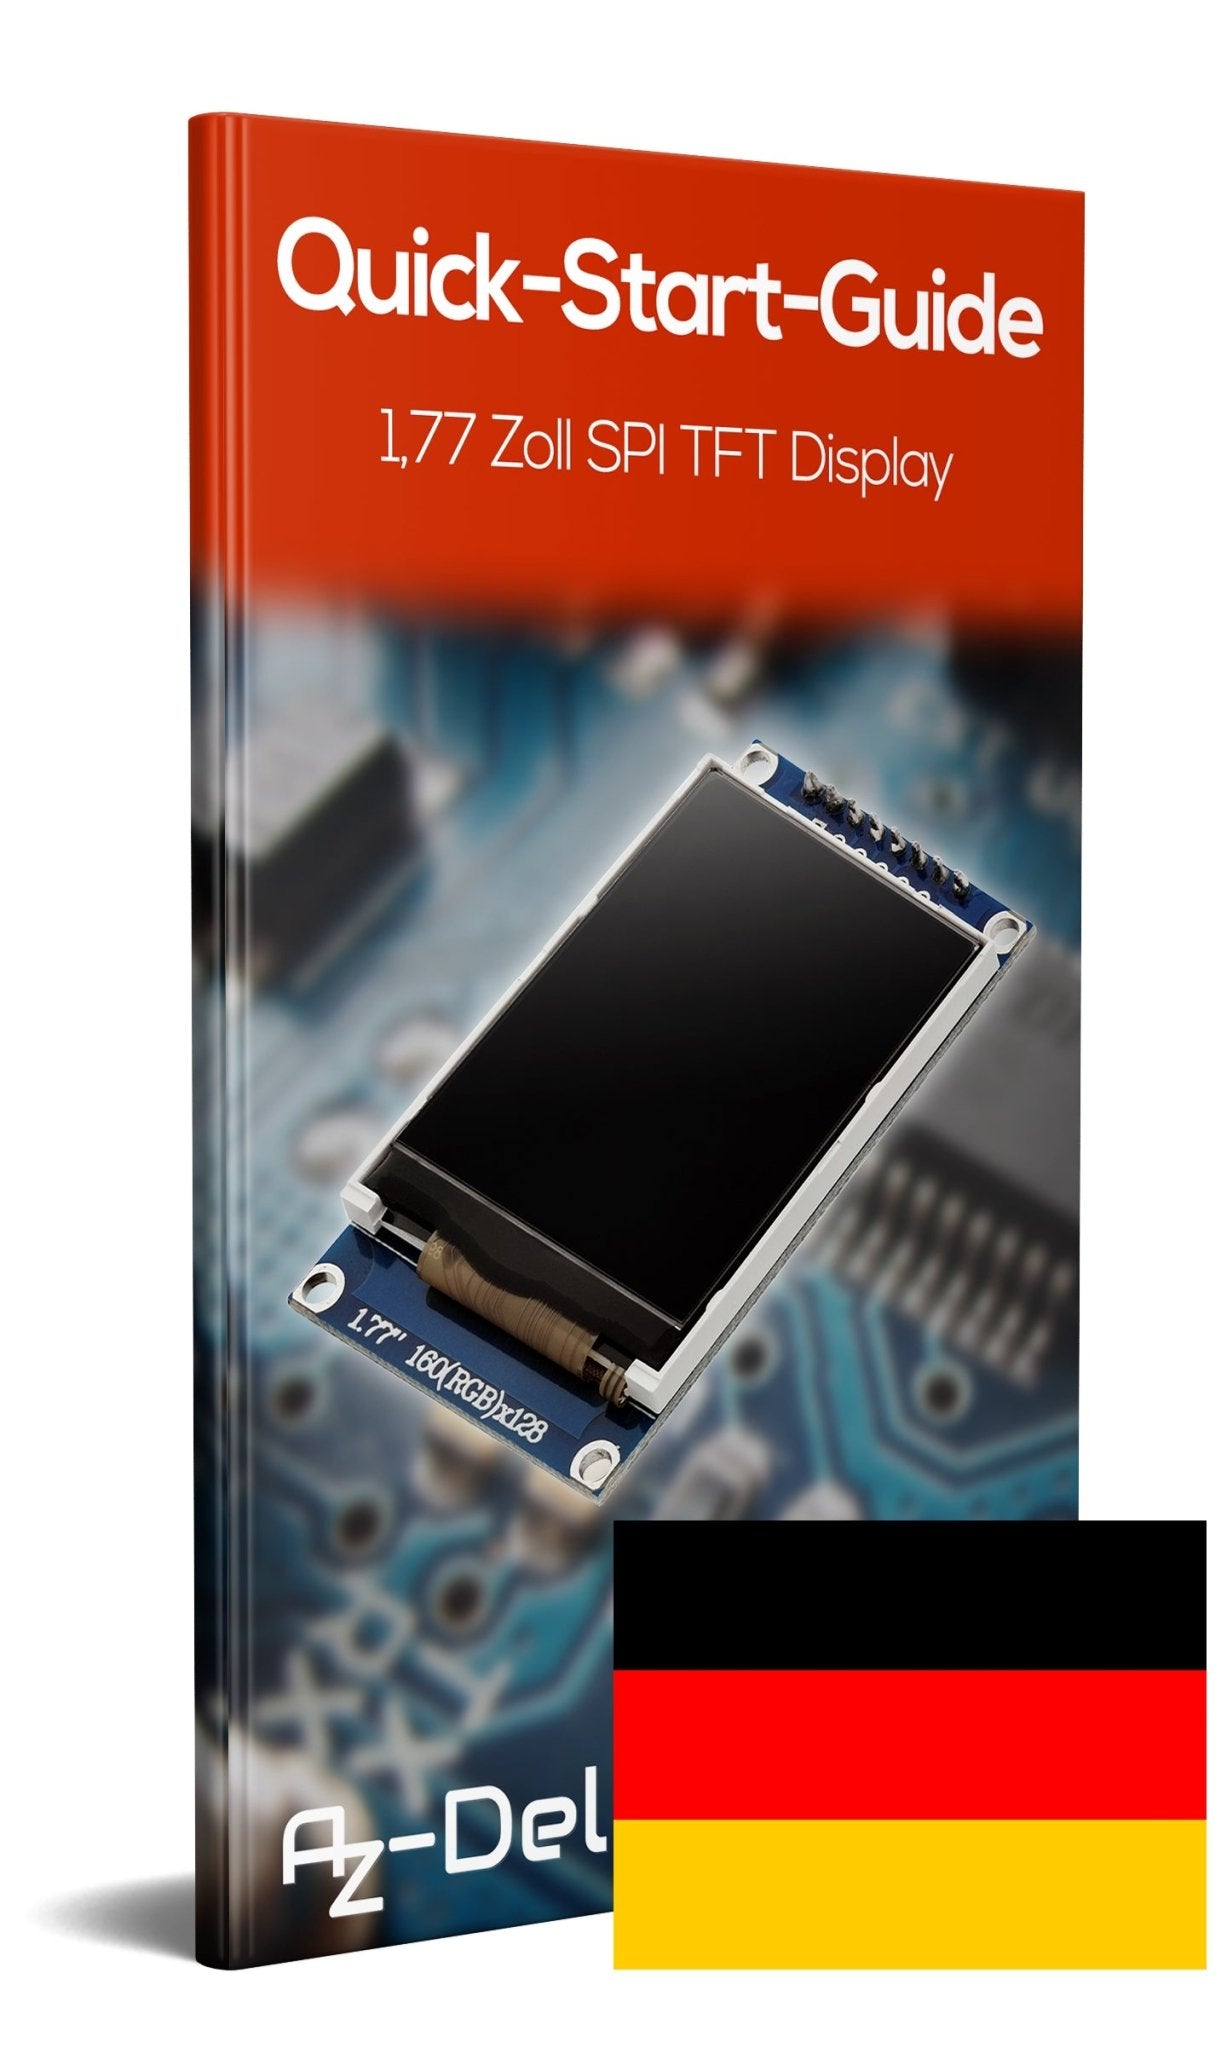 1.77 inch Spi TFT display and 128x160 pixels